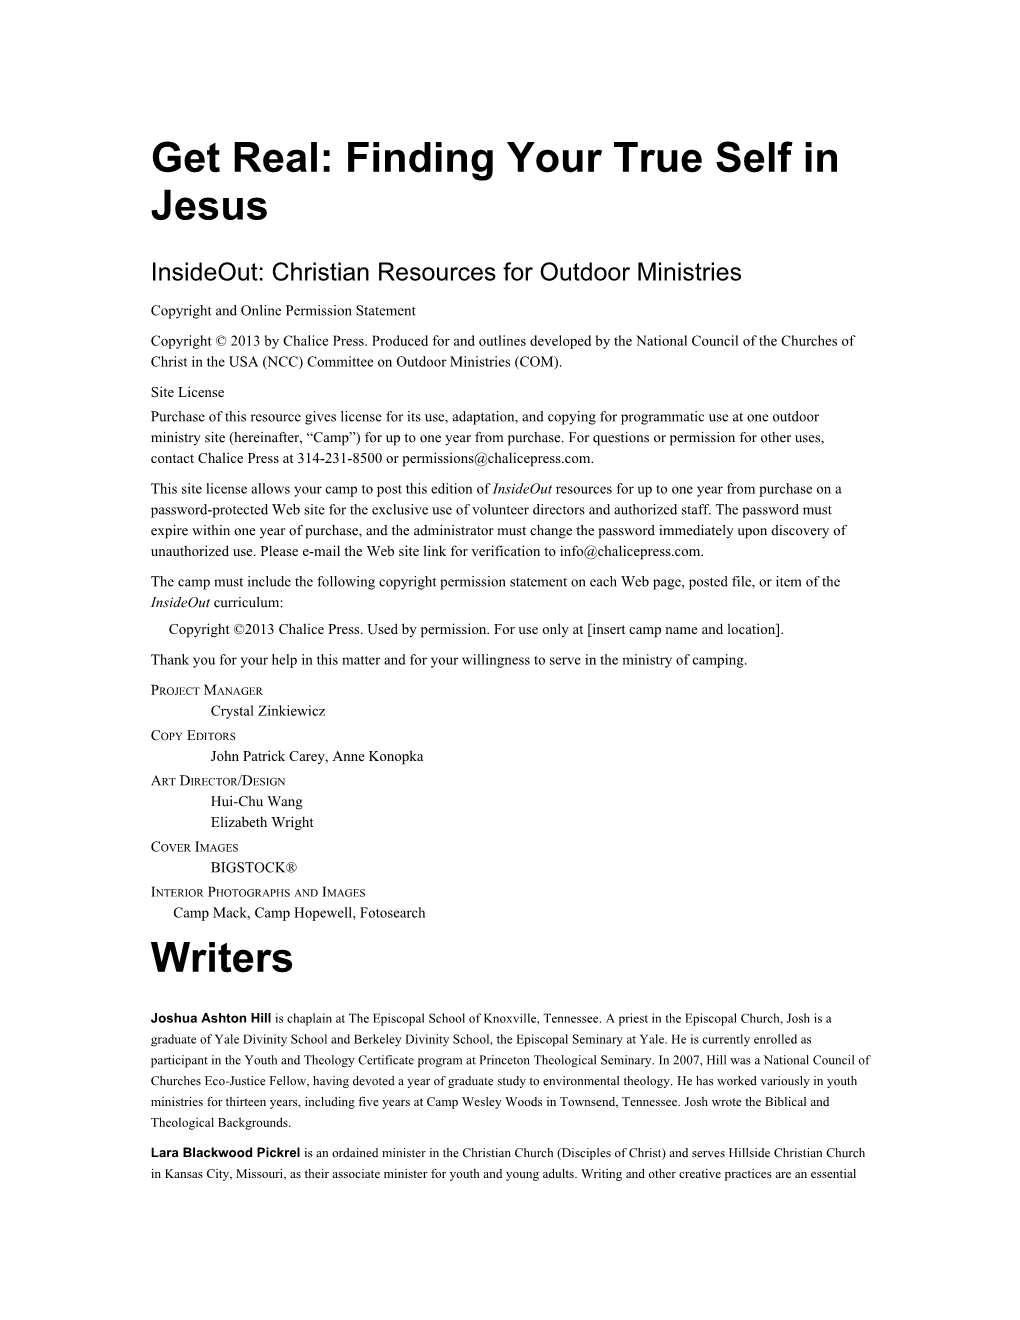 Get Real: Finding Your True Self in Jesus